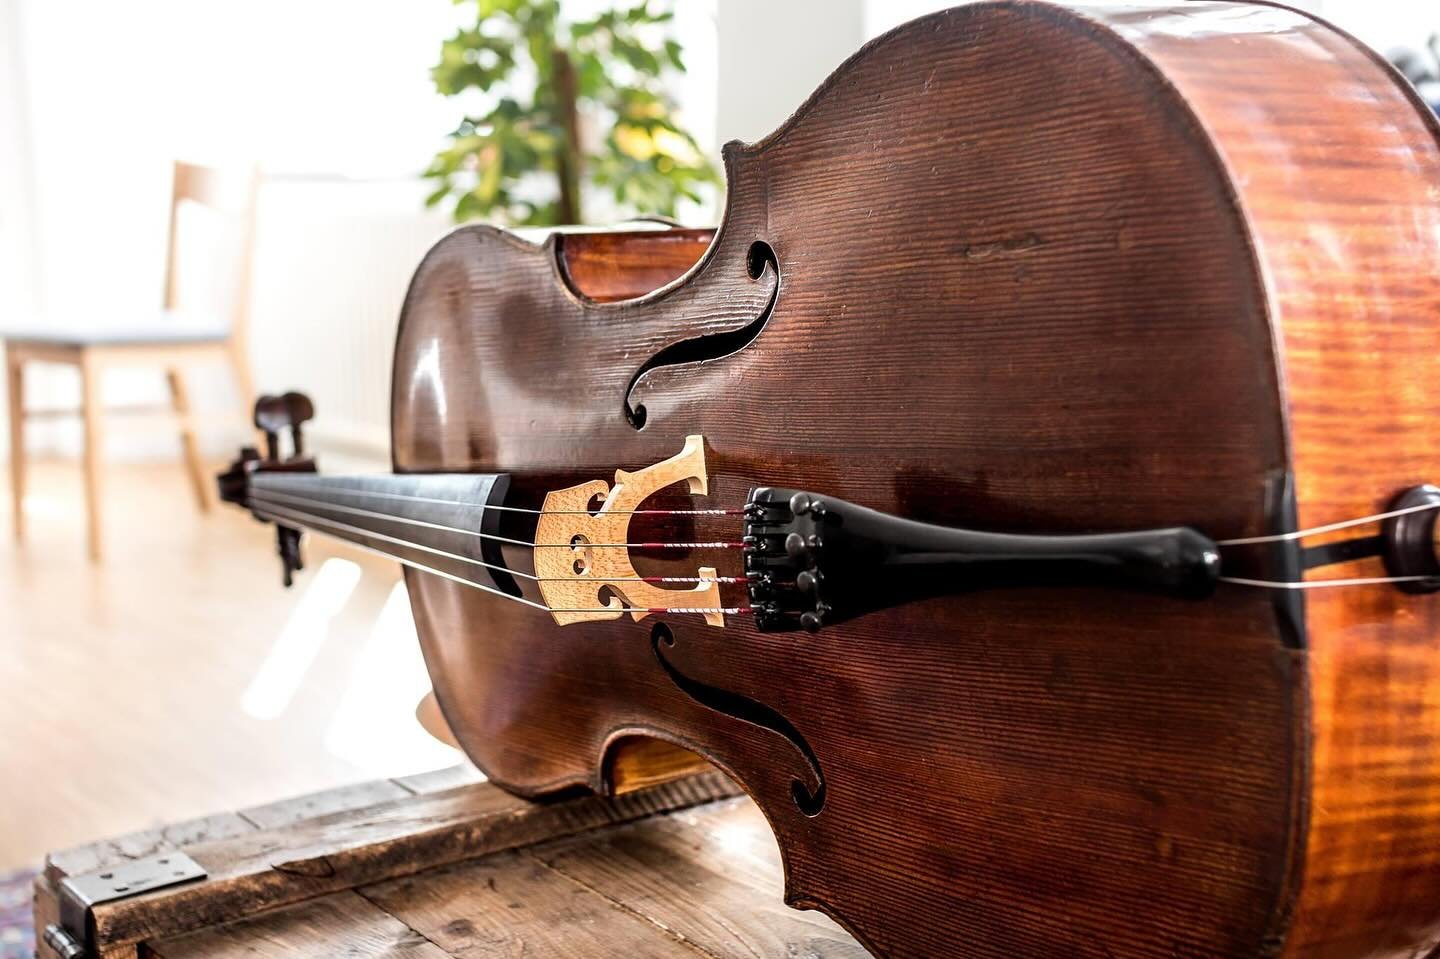 Cello for sale :)
Write me a DM
.
.
.
.
.
.
.
.
#cello #cellos #cellist #music #classical #classicalmusic #musician #chambermusic #klassik #lutherie #geigenbau #violinmaker #historicalinstrument #feldkirch #classicallove #musicforeveryone #oldinstrum